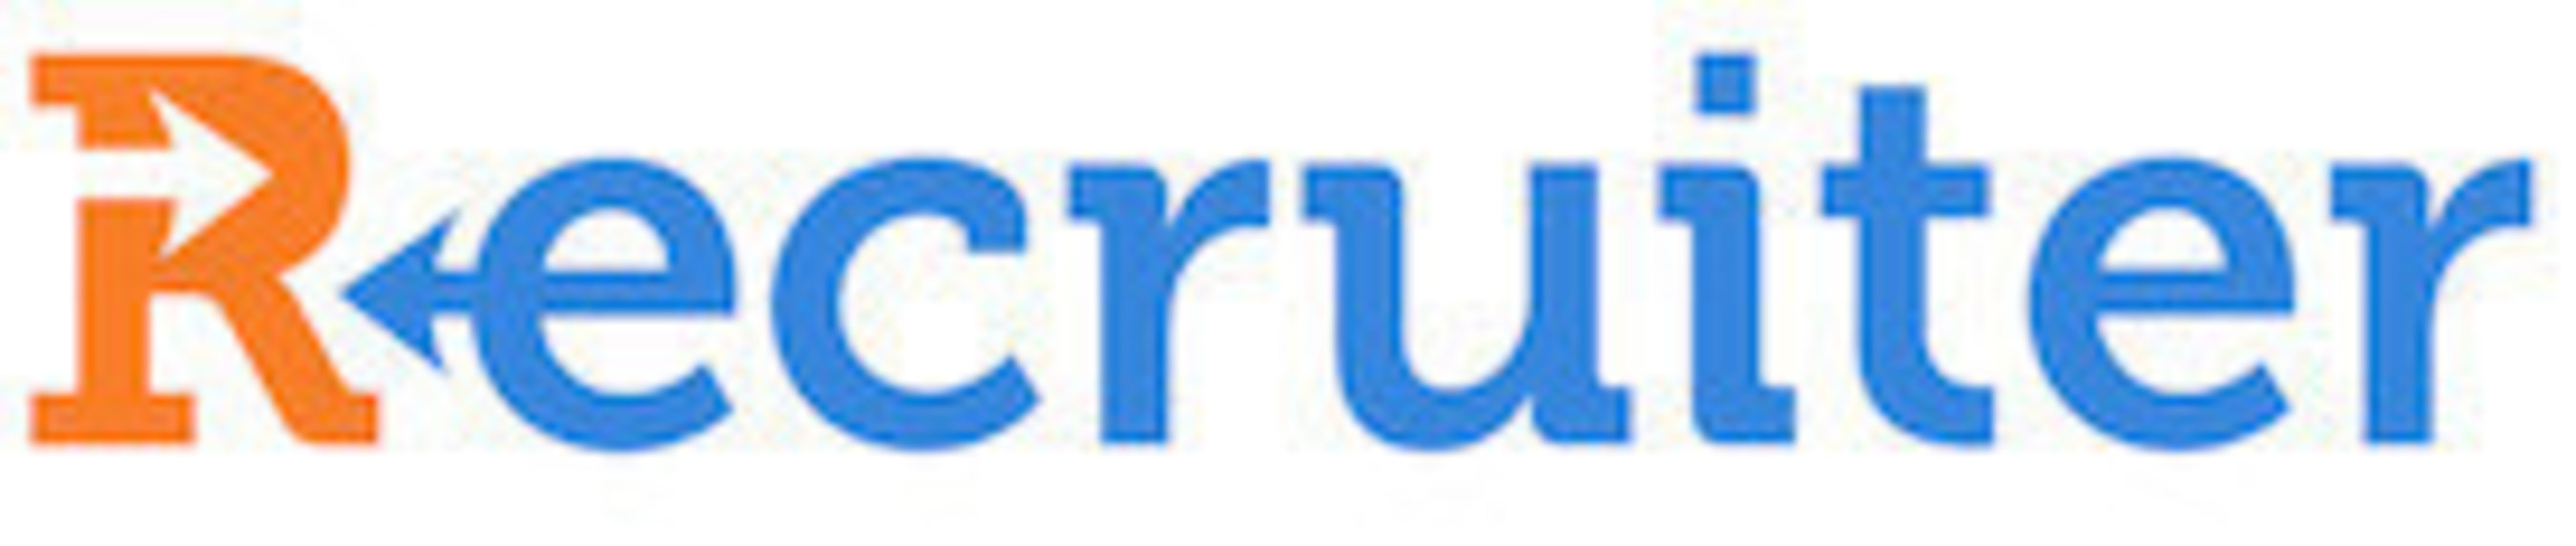 Recruiter.com Acquires Strategic Technology and Staff of Jasper Group (PRNewsFoto/Recruiter.com, Inc.)